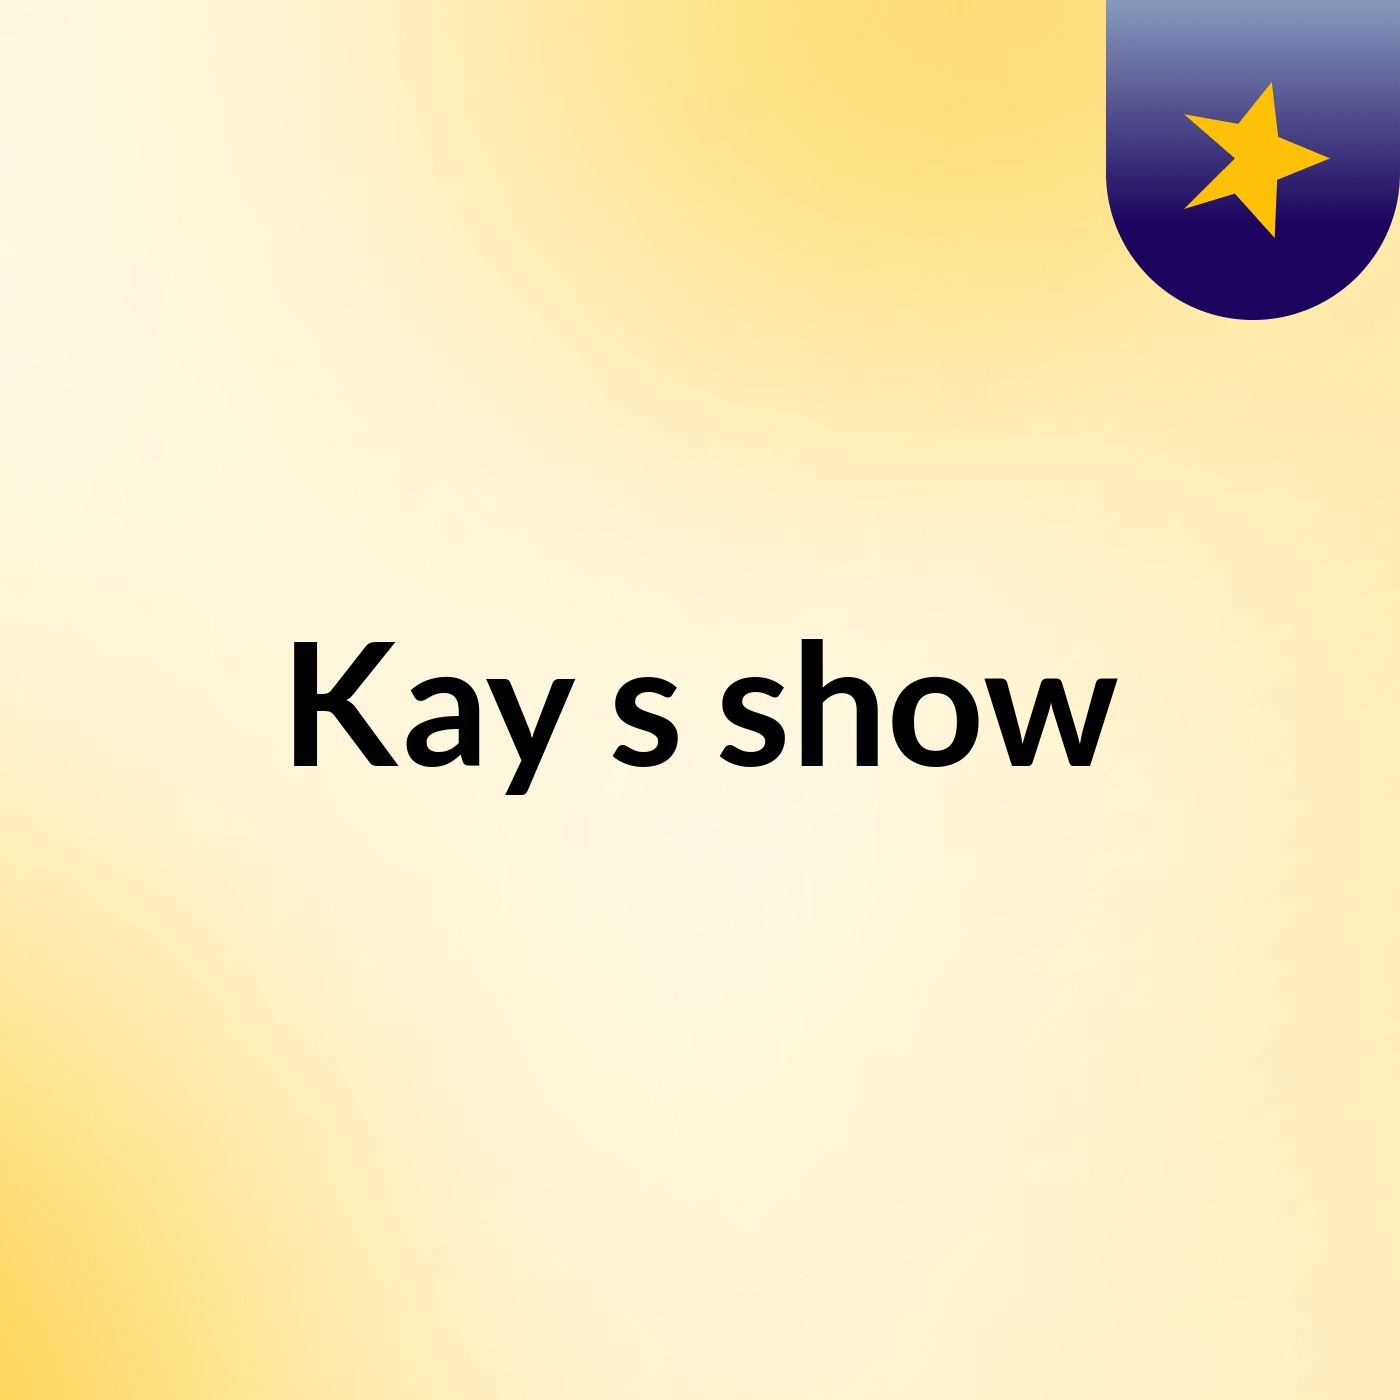 Episode 2 - p5 - Kay's show